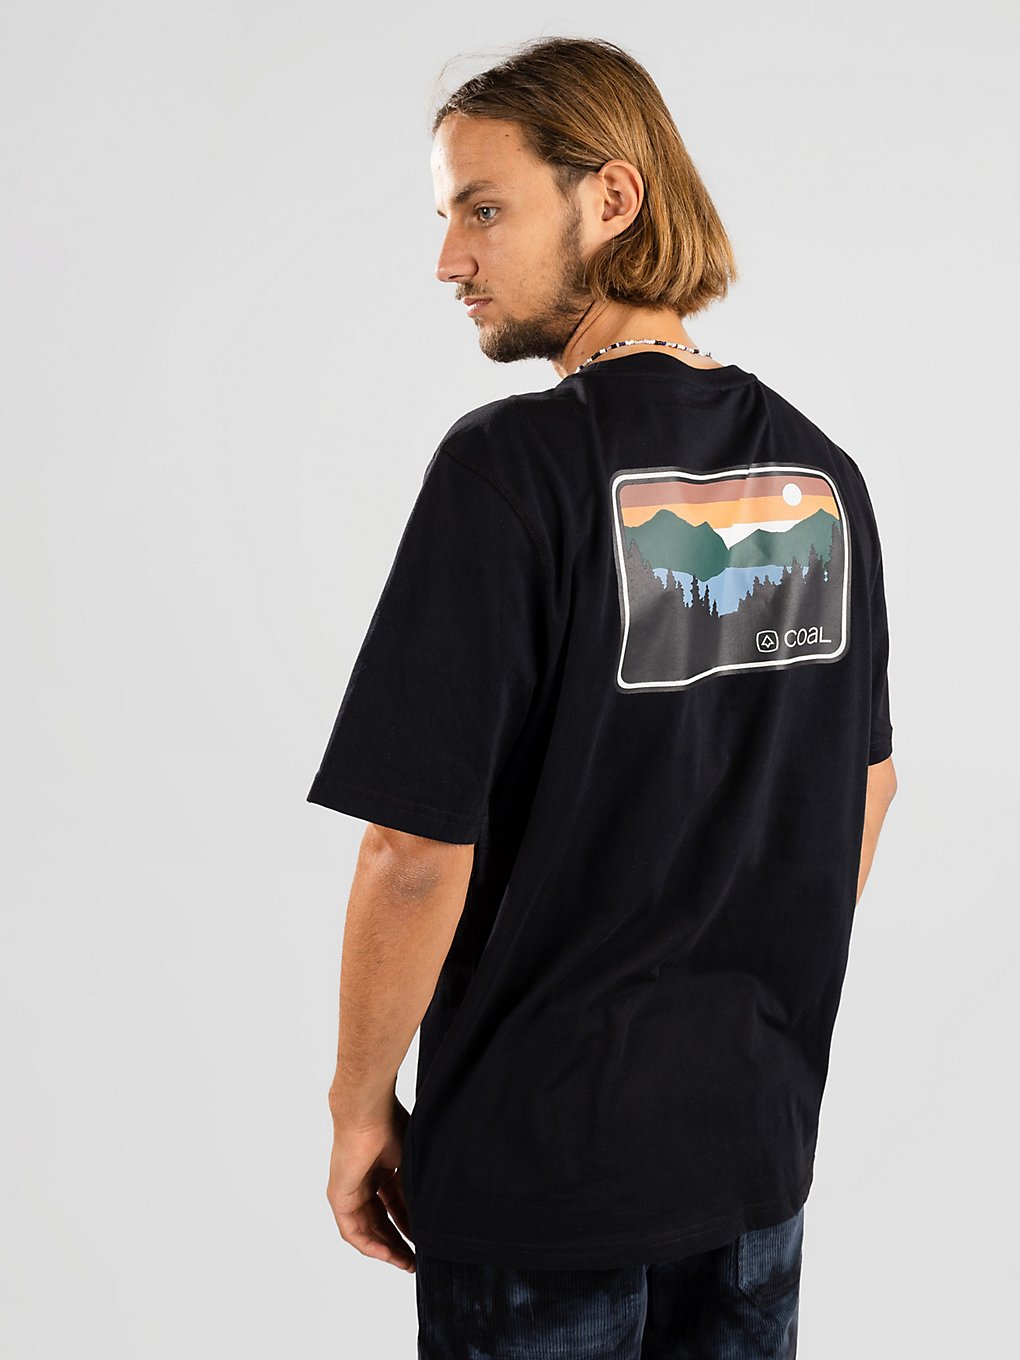 Coal Klamath T-Shirt anthracite kaufen